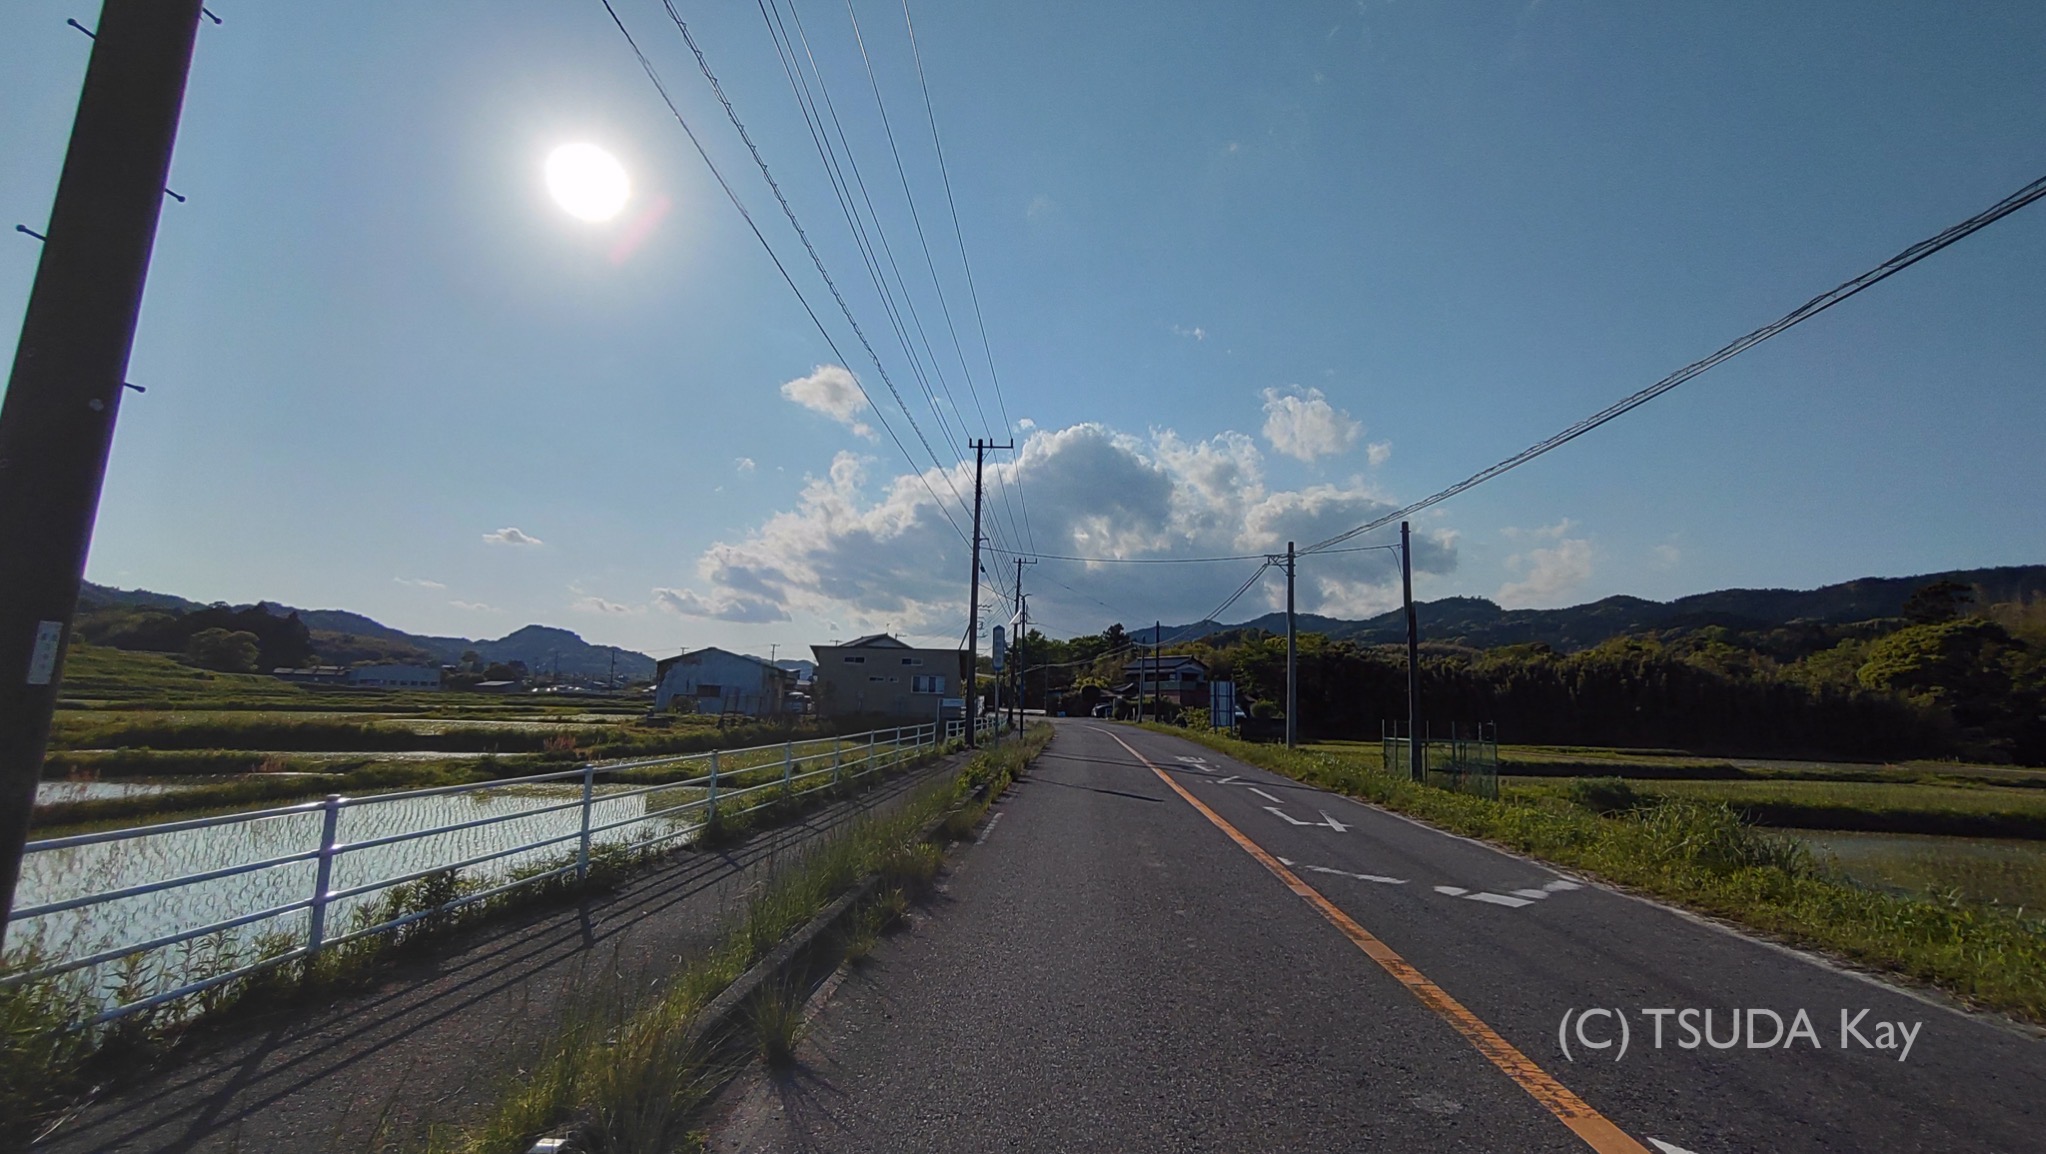 I visited kamogawa 12